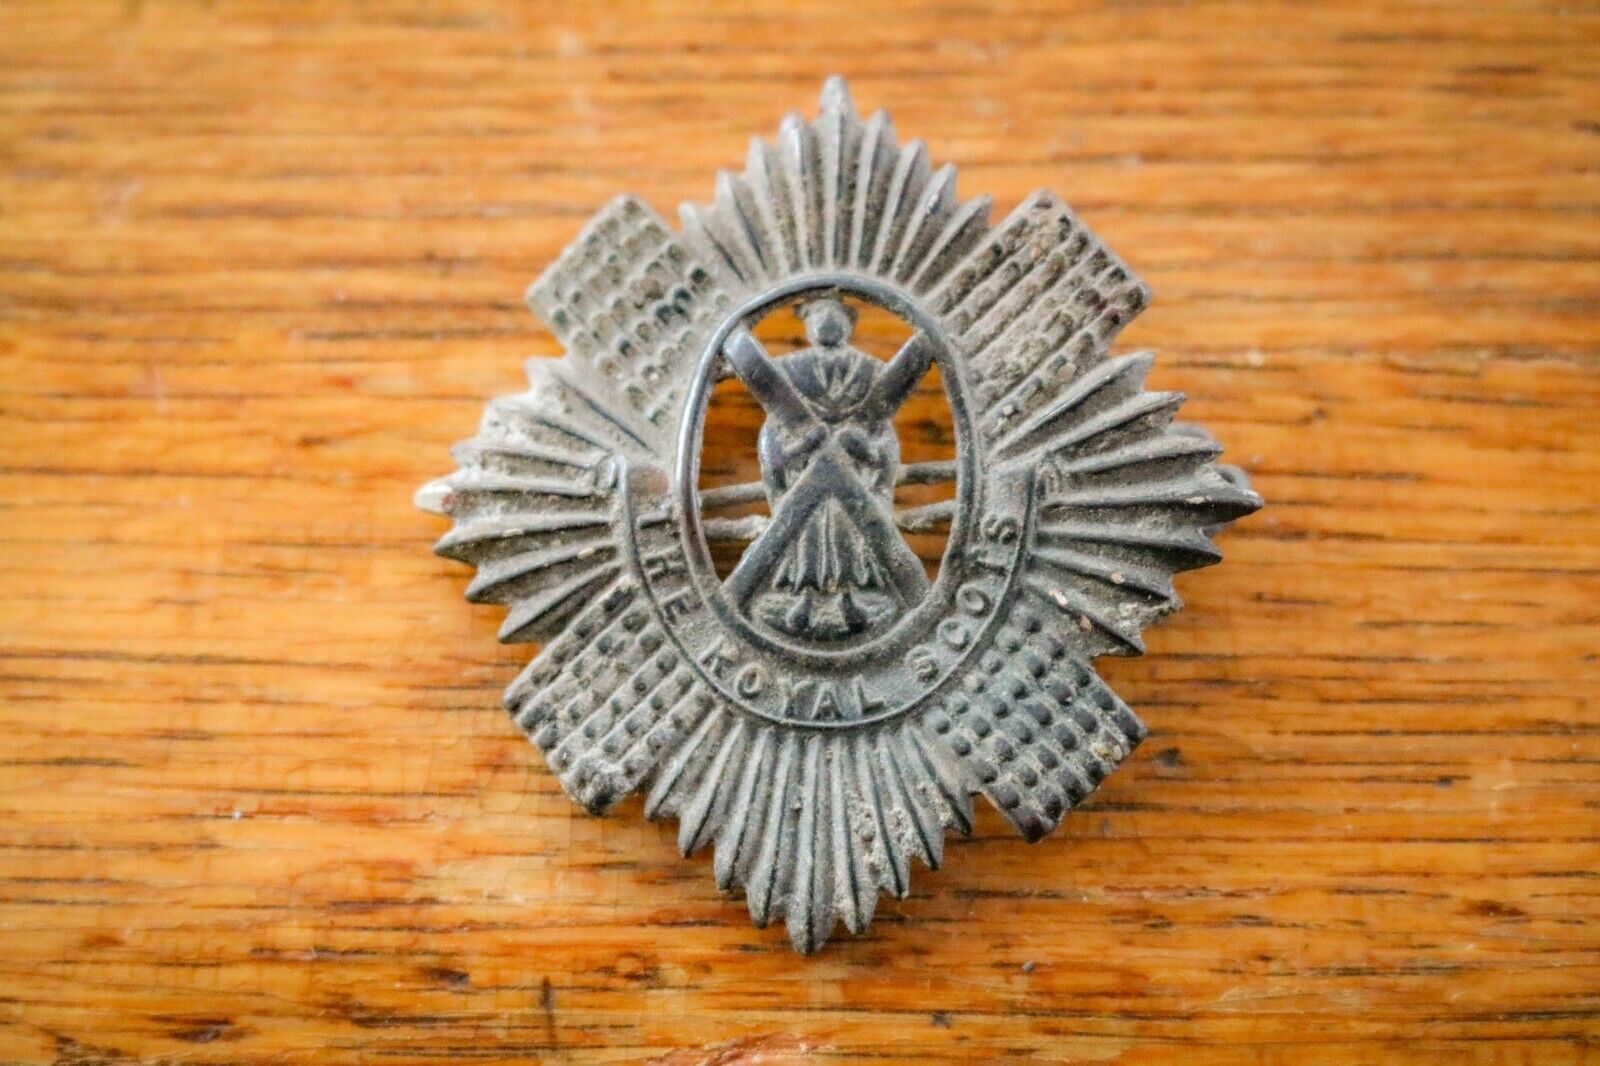 Antique - The Royal Scott’s Cap Badge - Rare Edition